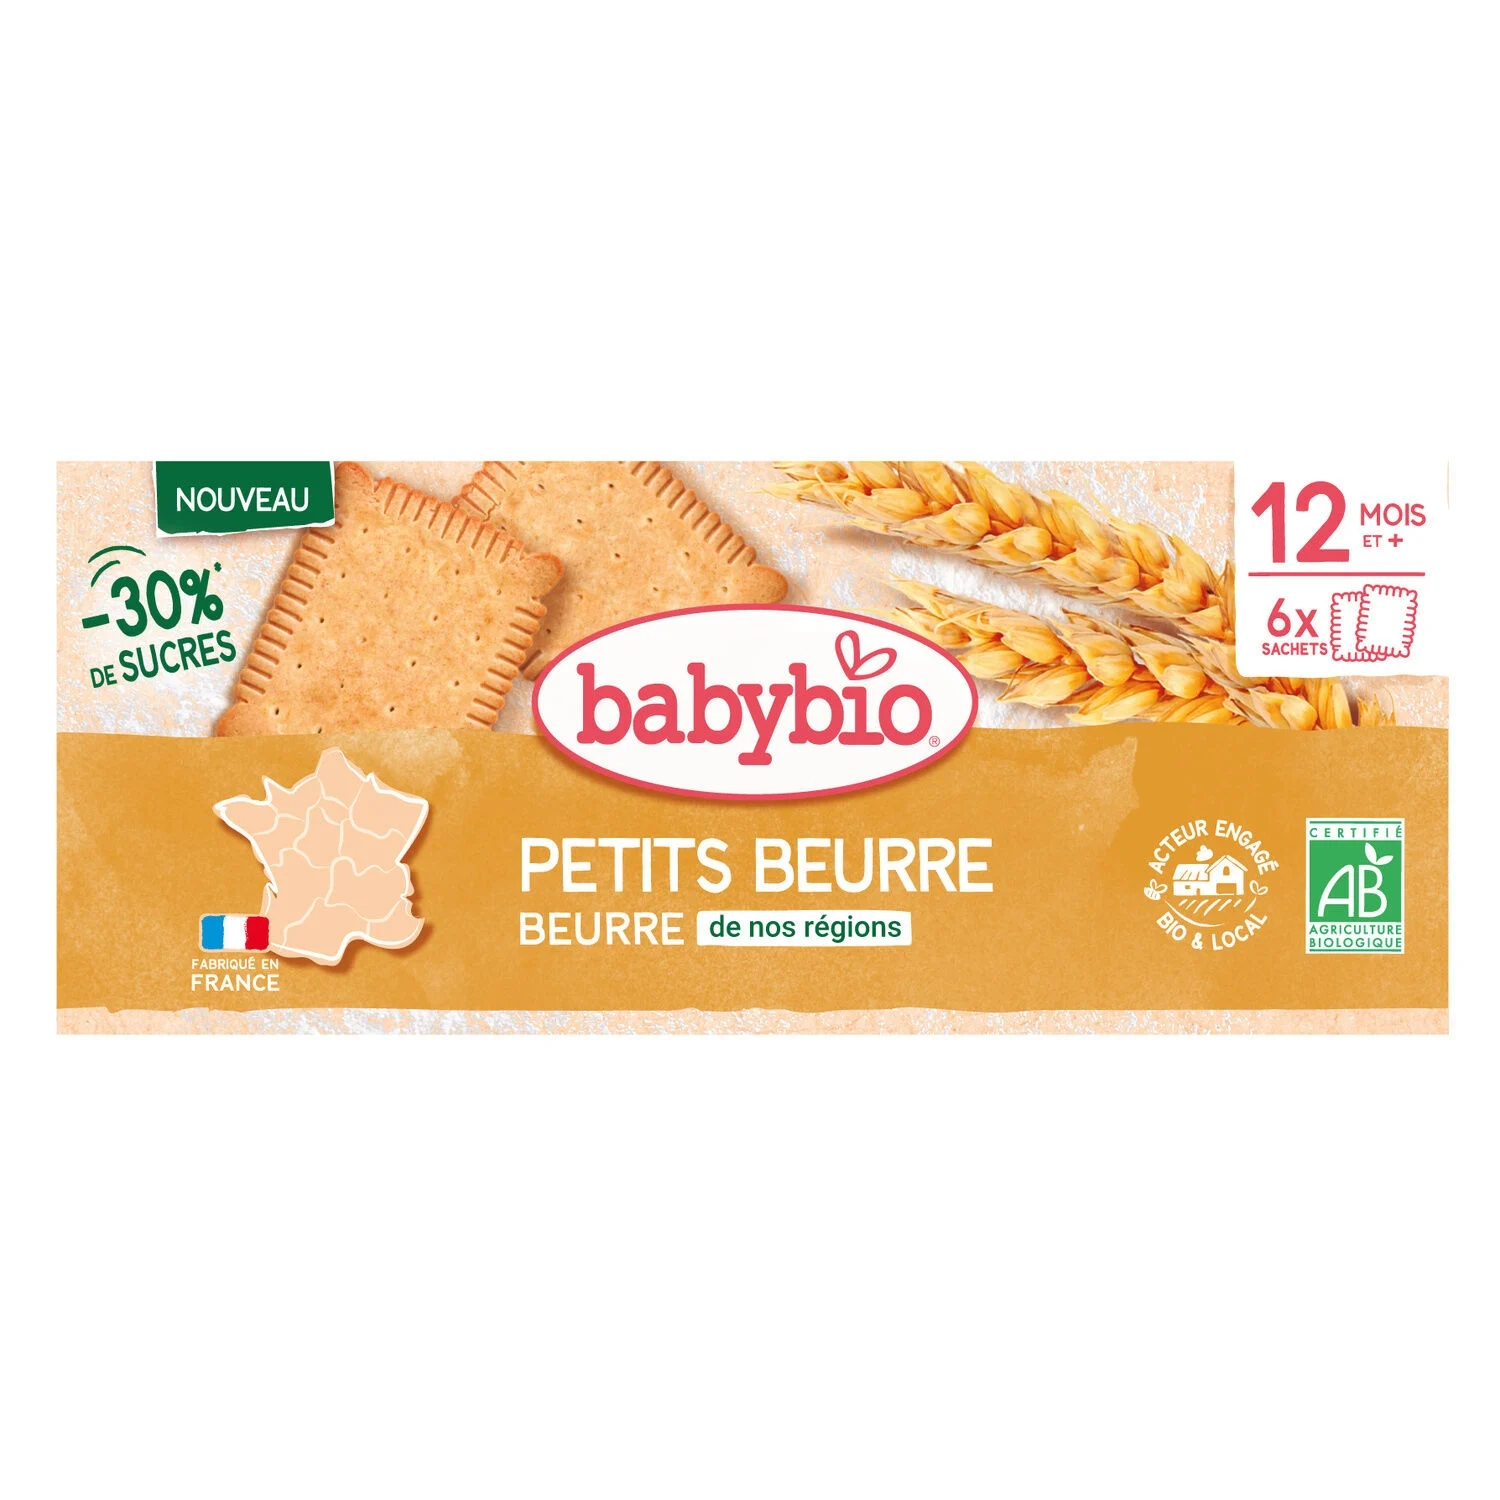 120g Petit Beurre Babybio 12m